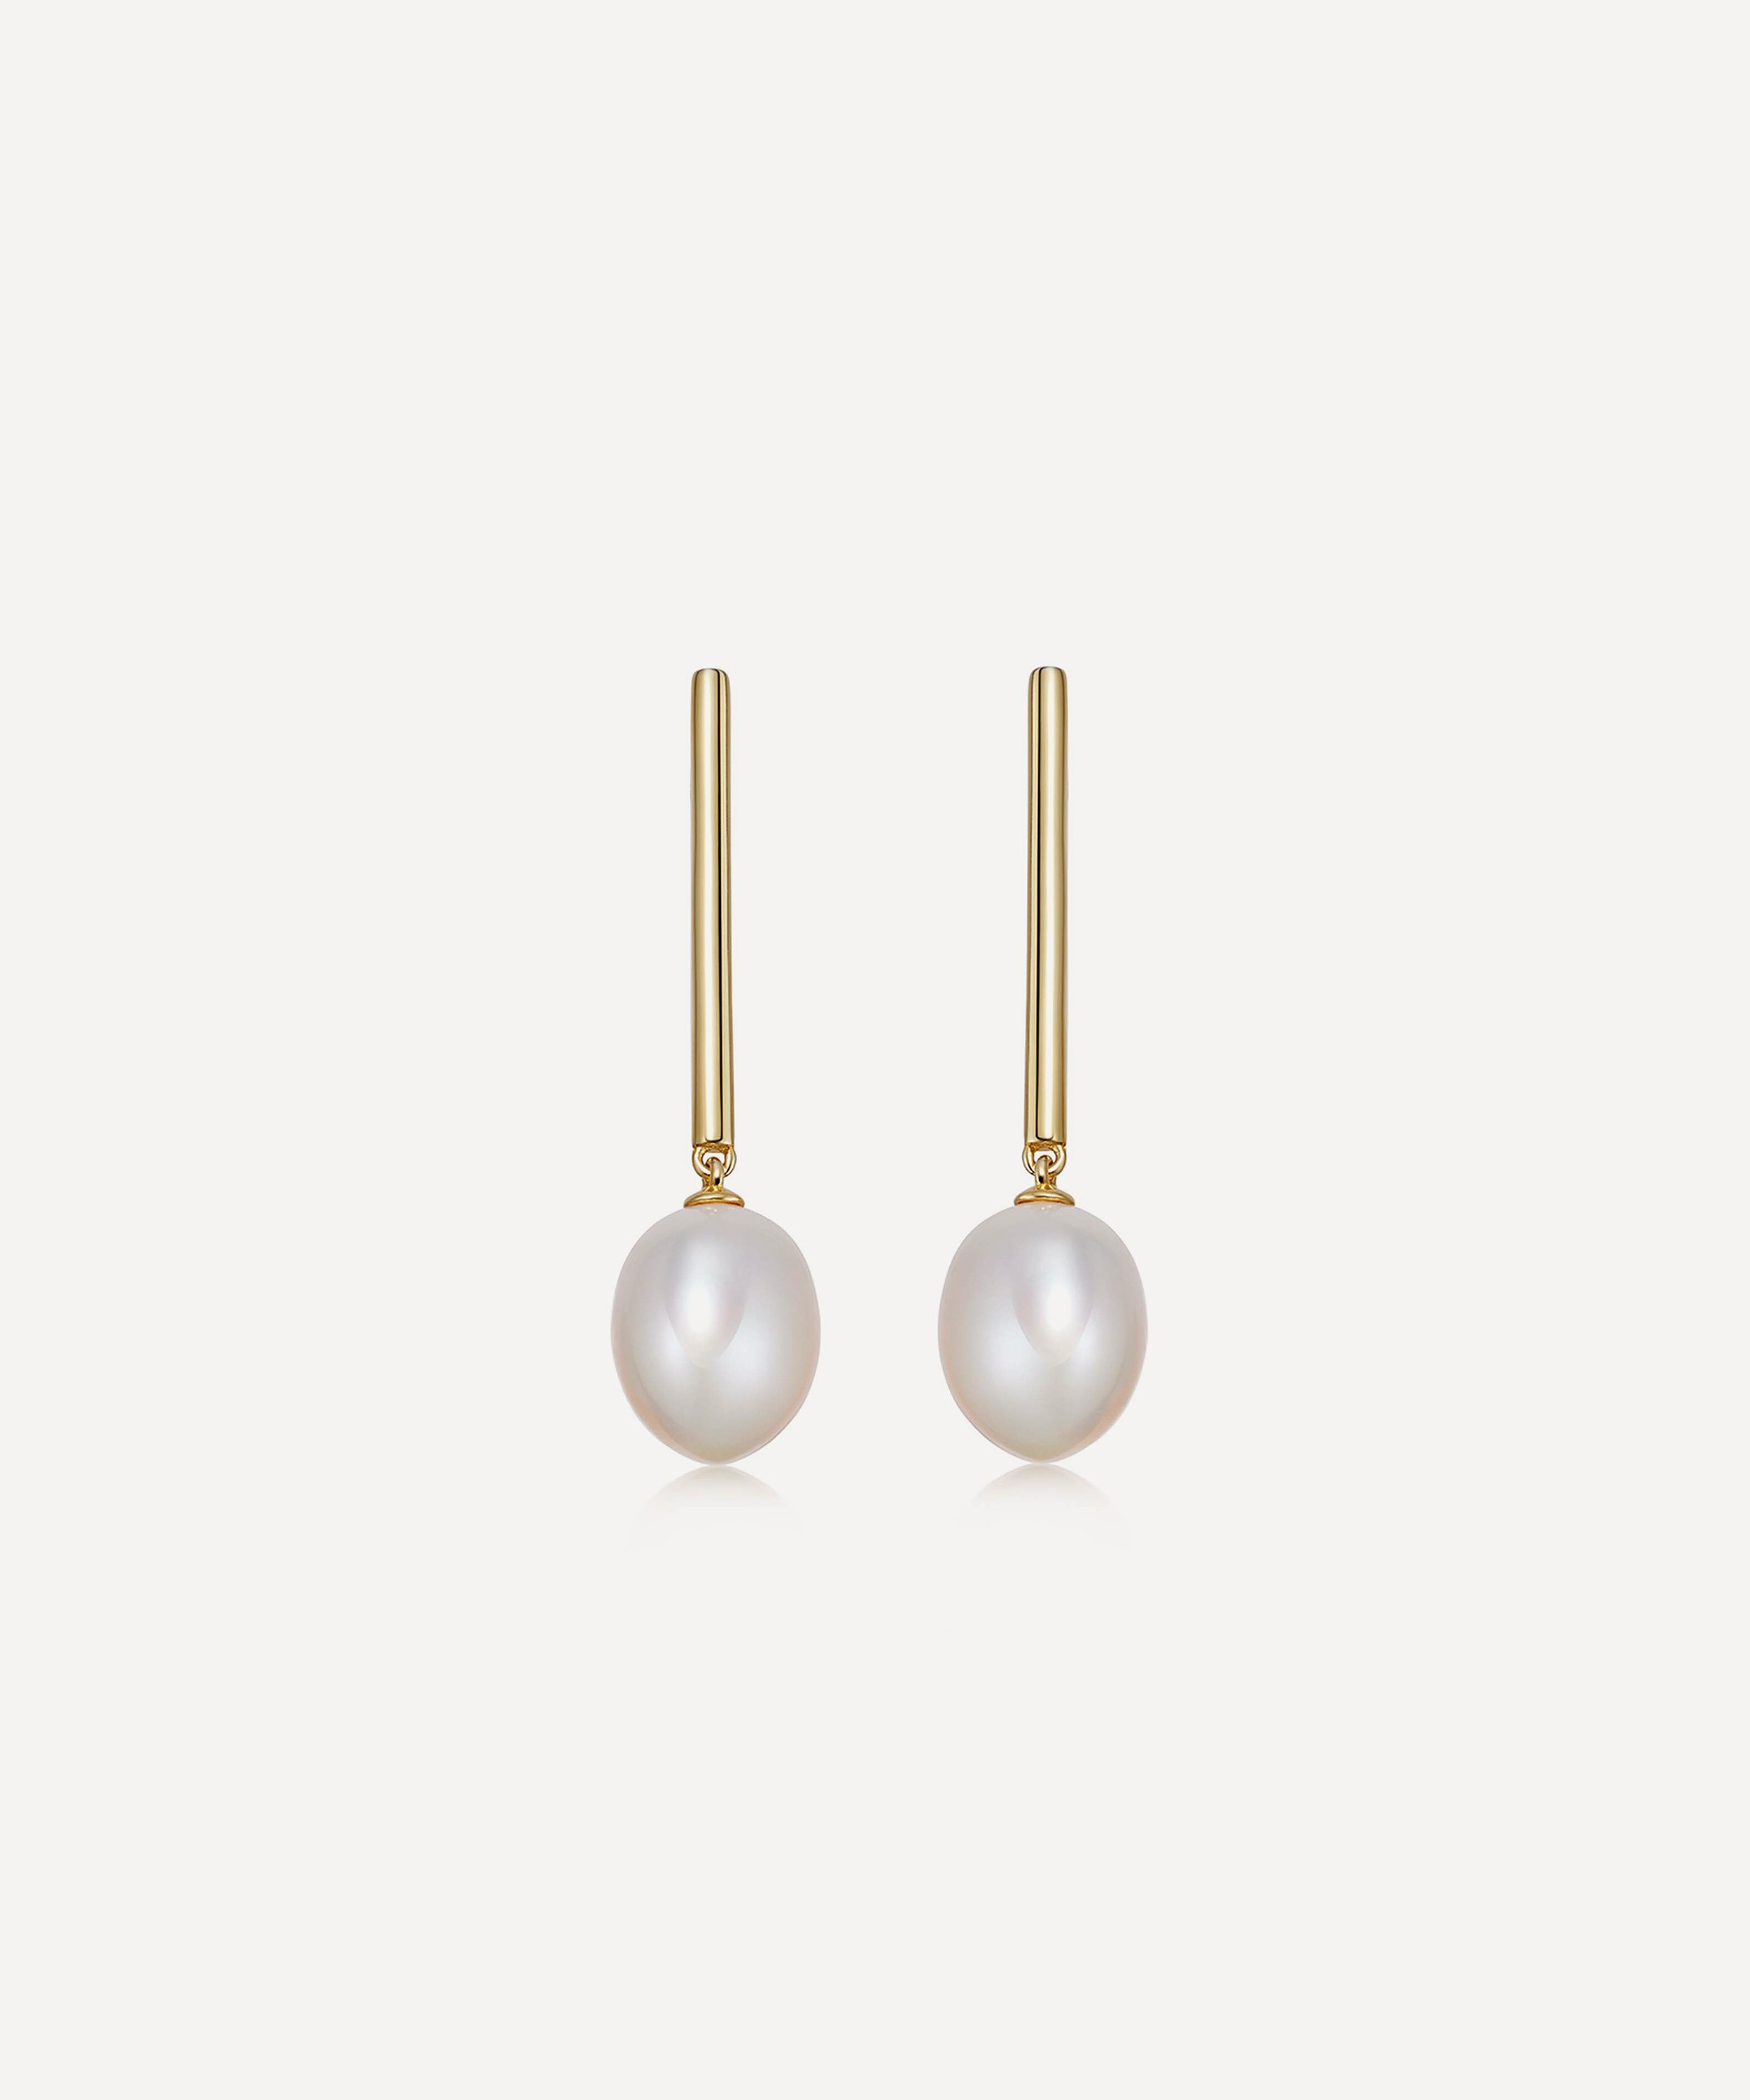 Astley Clarke - 18ct Gold-Plated Vermeil Silver Celestial Pearl Drop Earrings